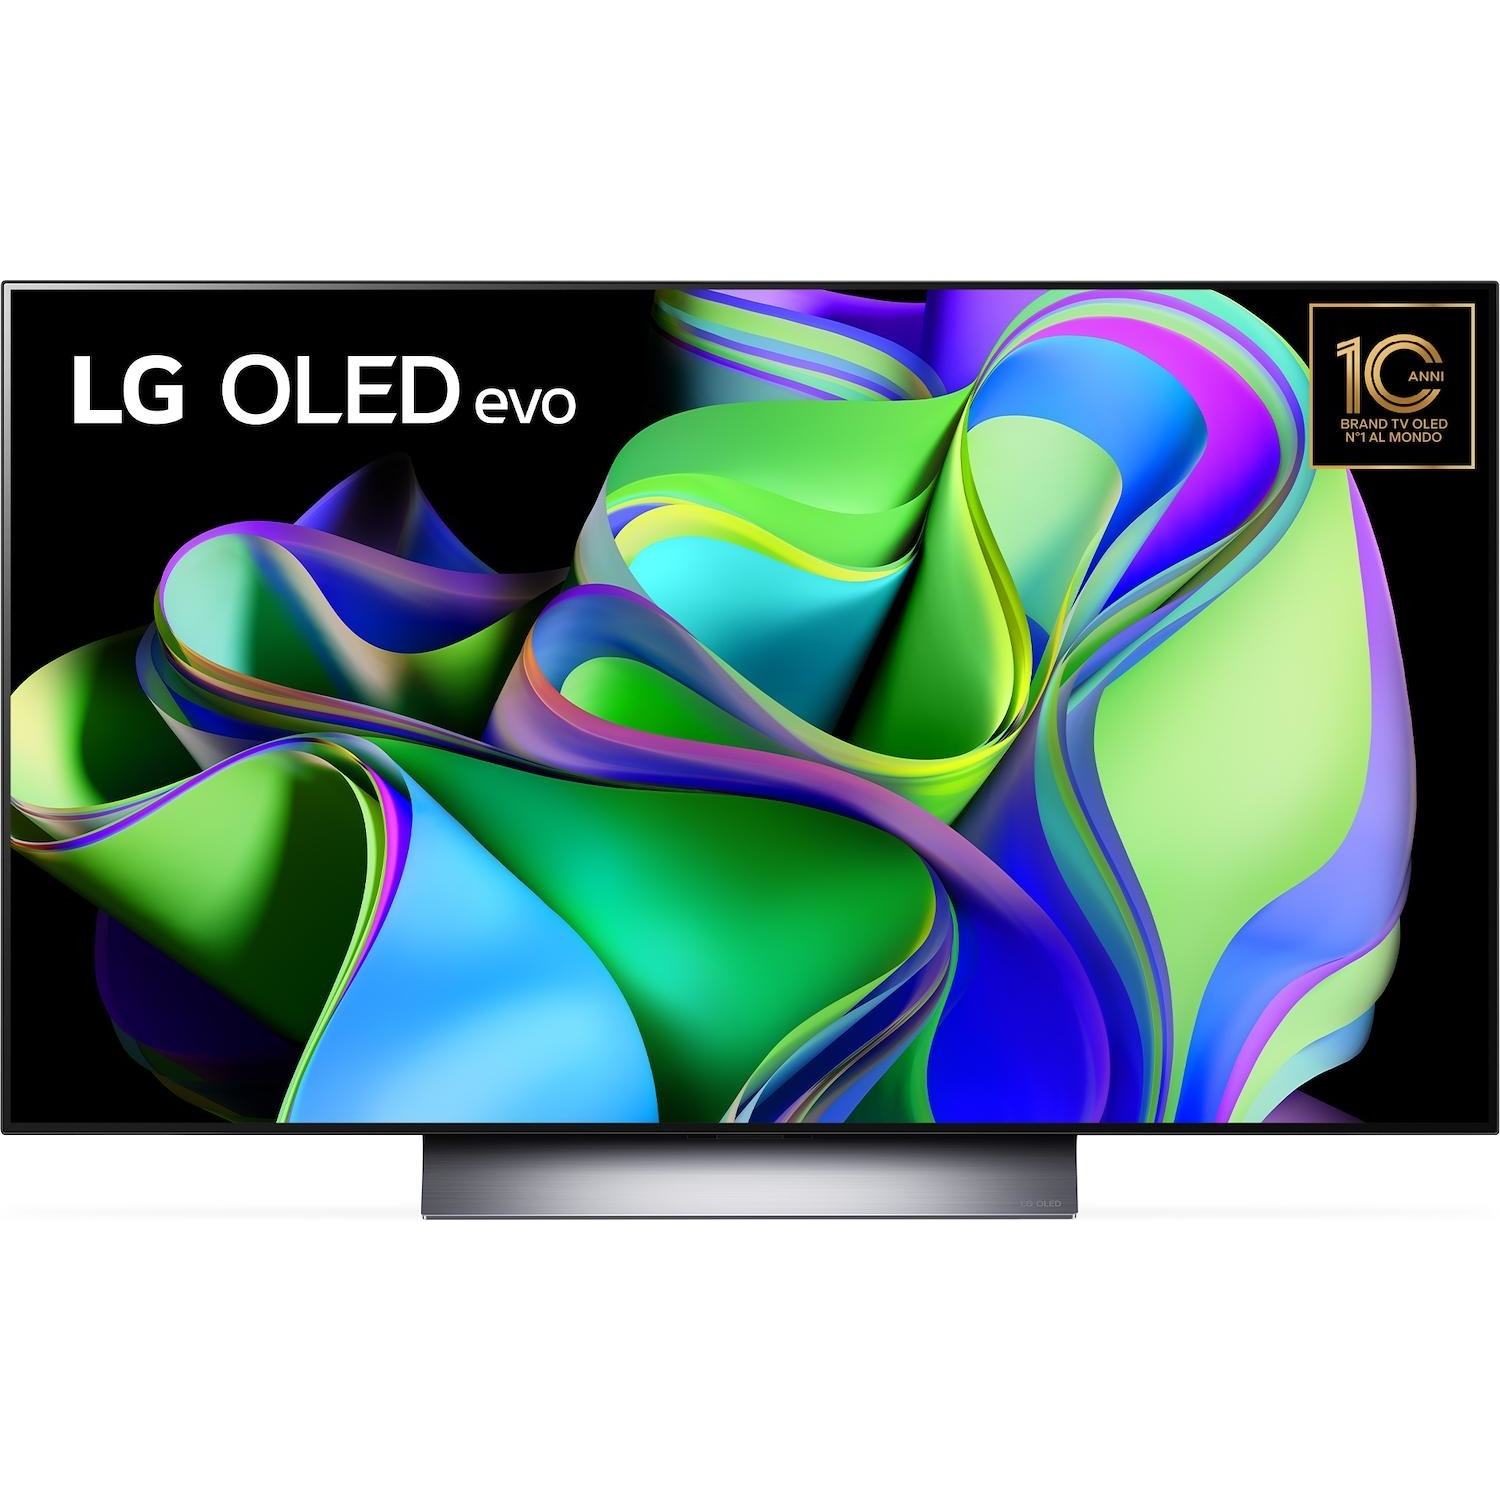 Immagine per TV OLED LG 48OLEDC34 Calibrato 4K e FULL HD da DIMOStore